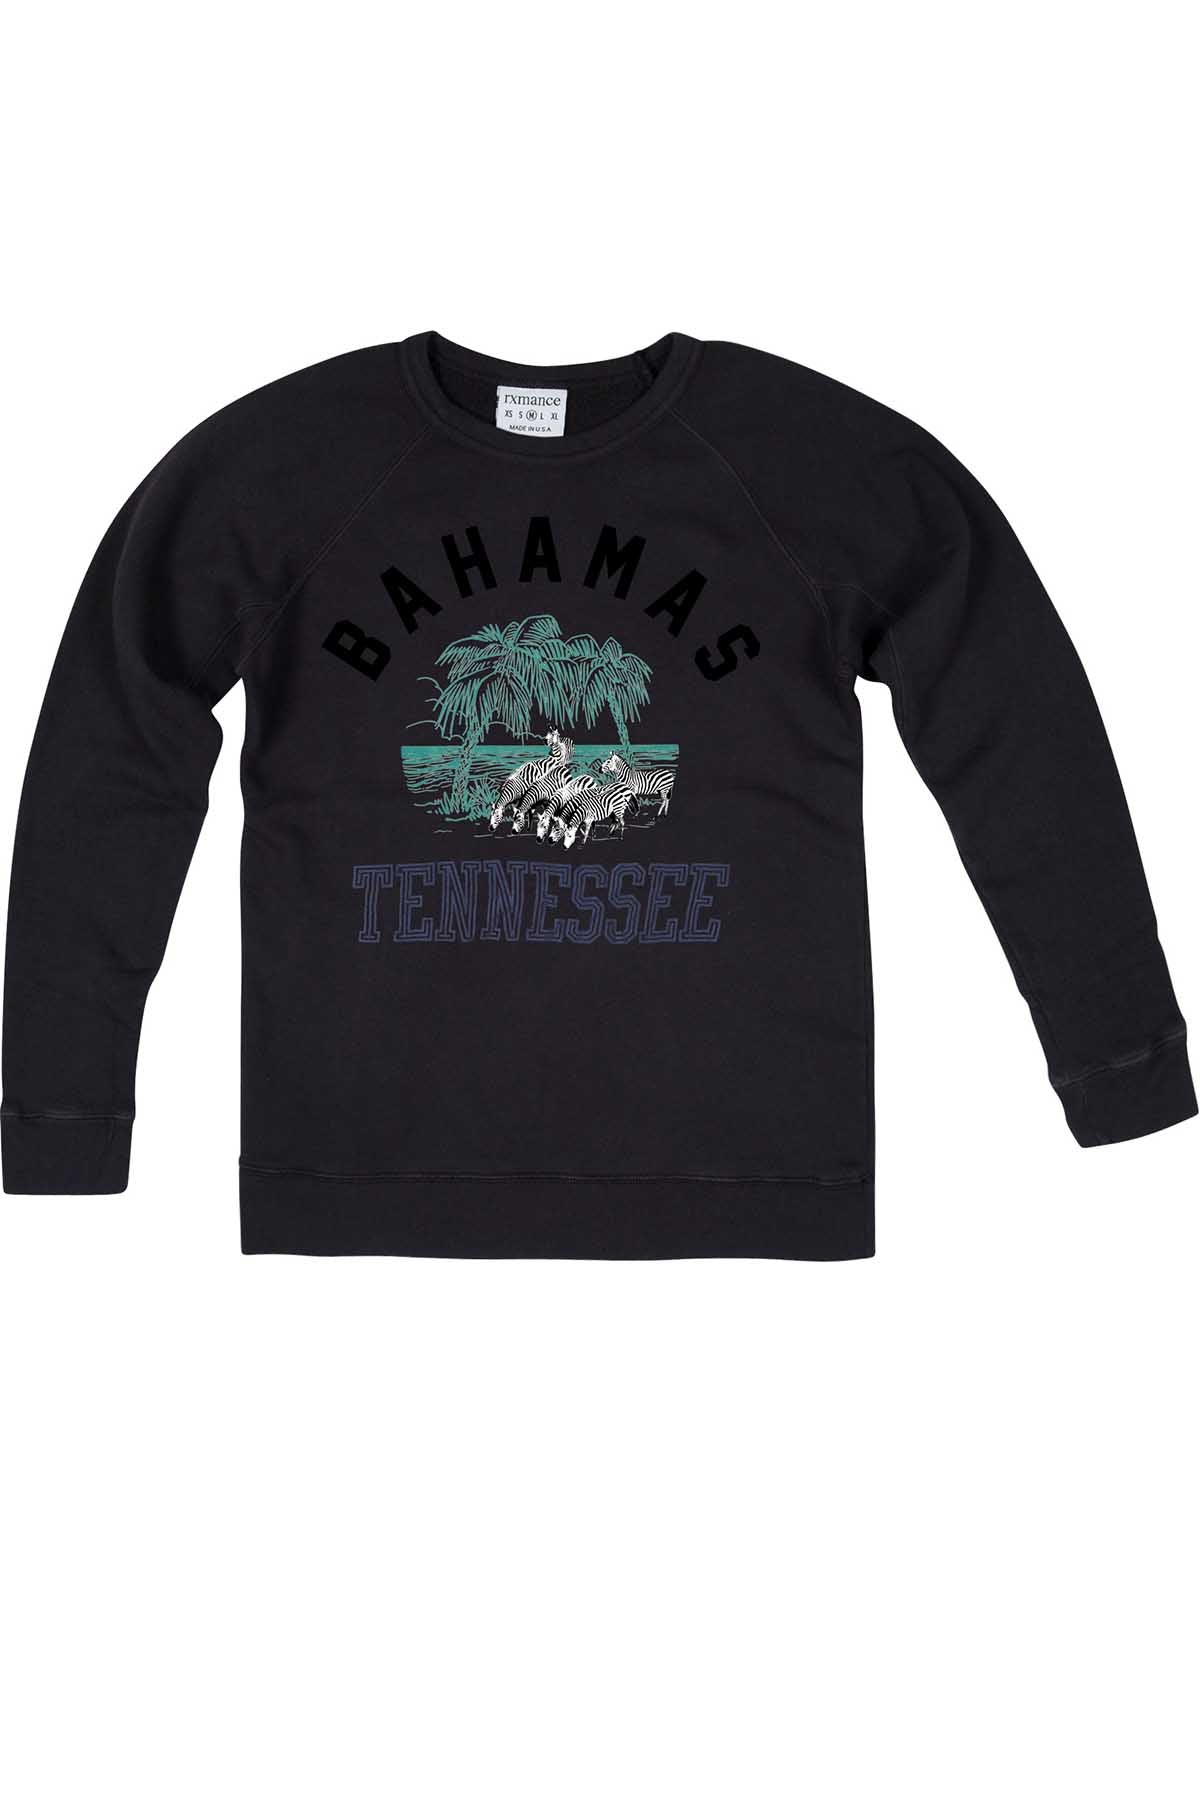 Rxmance Unisex Black Bahamas Tennessee Sweatshirt